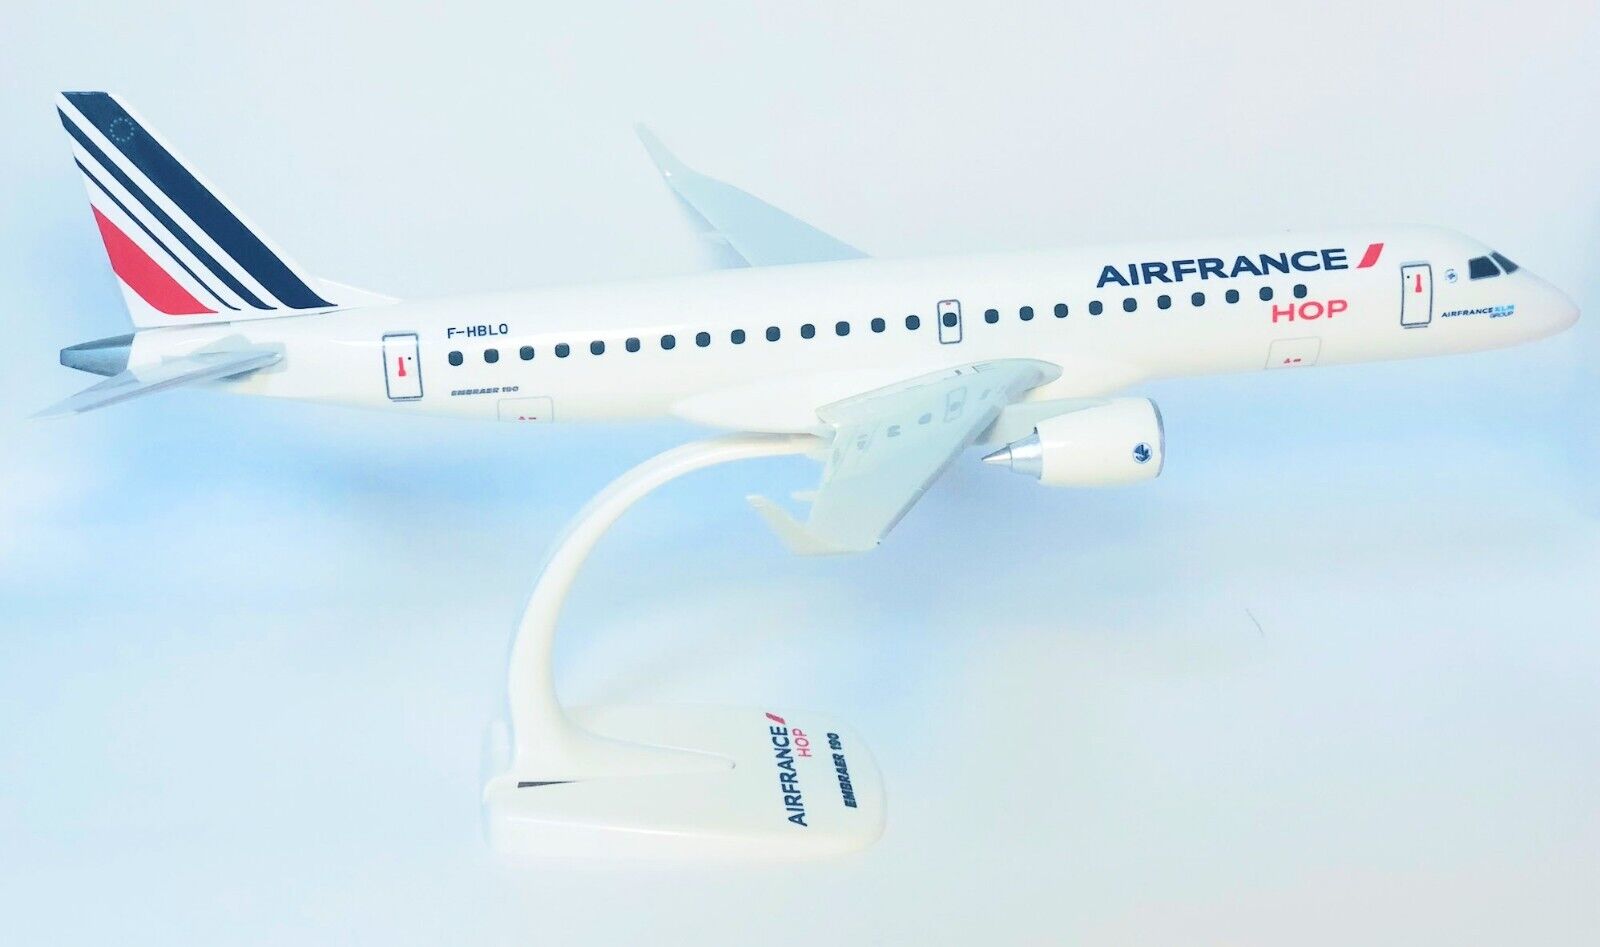 Embraer ERJ-190 Air France HOP Herpa Snap Fit Airliner Collectors Model 1:100